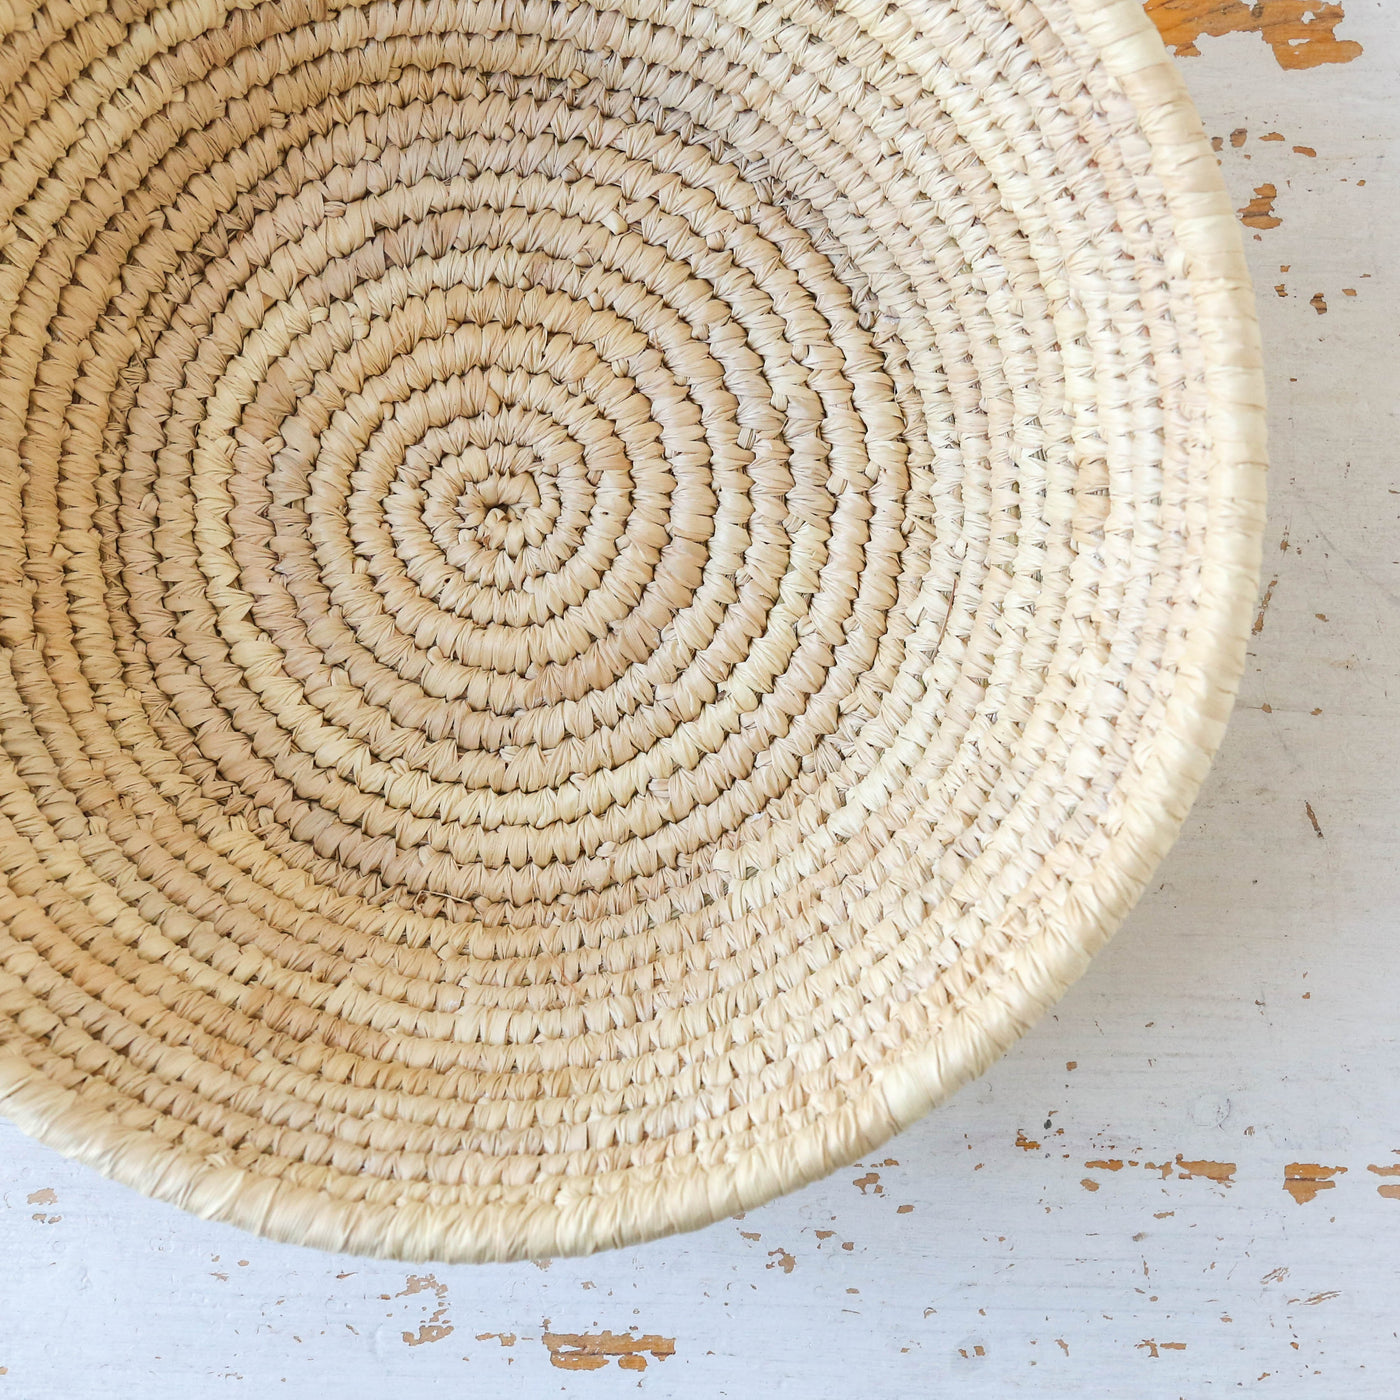 Woven Palm Leaf Bread Basket